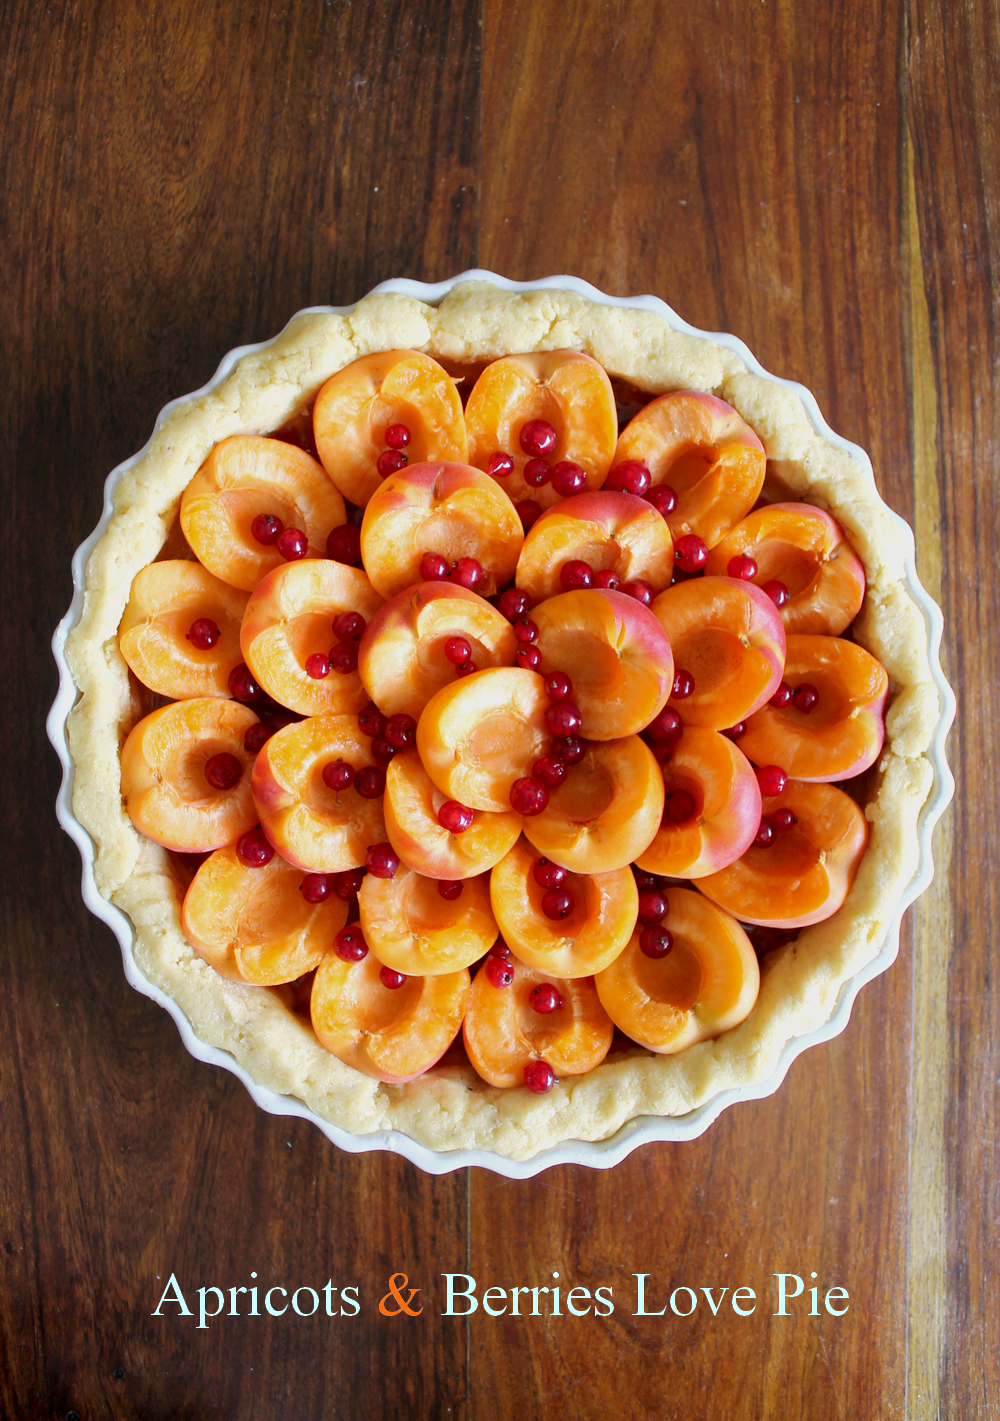 Apricots & berries love pie 1